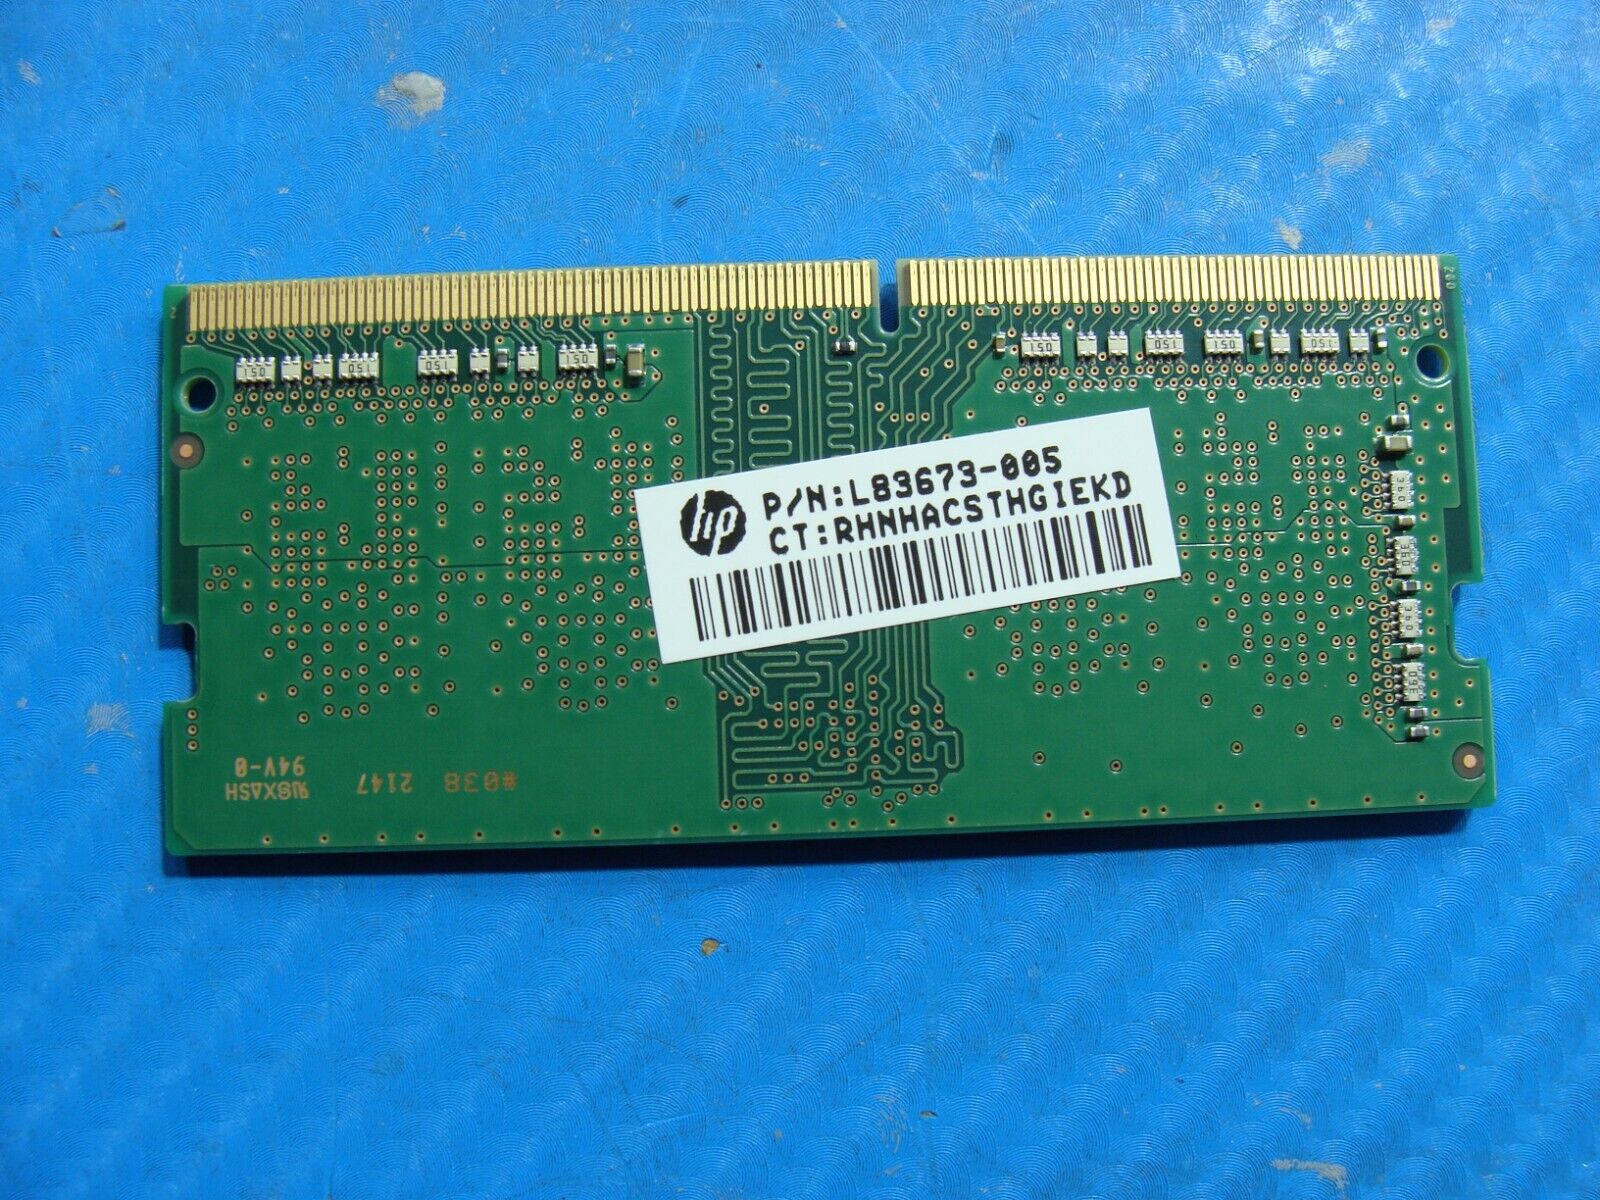 HP 17t-cn000 Samsung 4GB 1Rx16 PC4-3200AA Memory RAM SO-DIMM M471A5244CB0-CWE